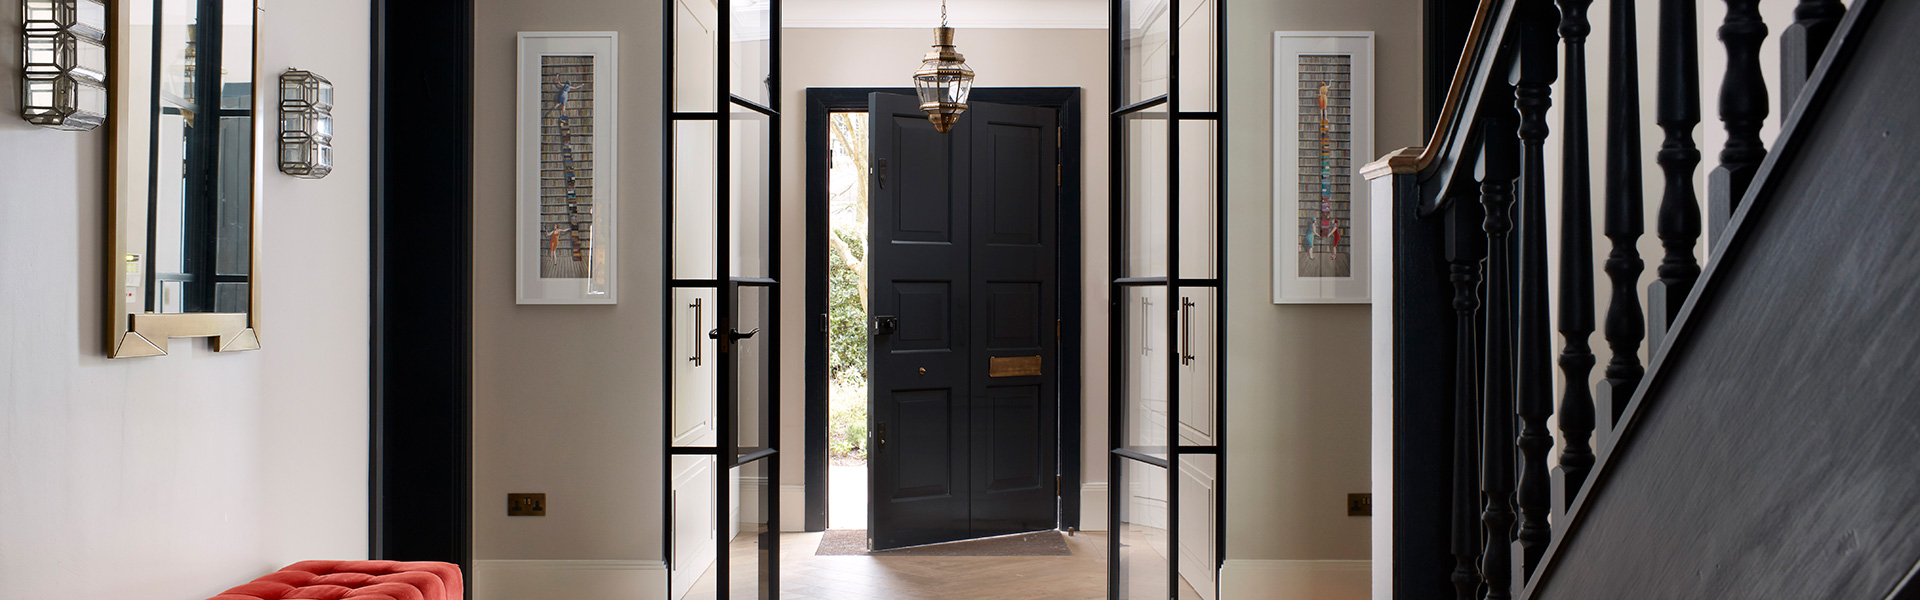 Entrance vestibule with crittal style door - grand designs - home improvements 